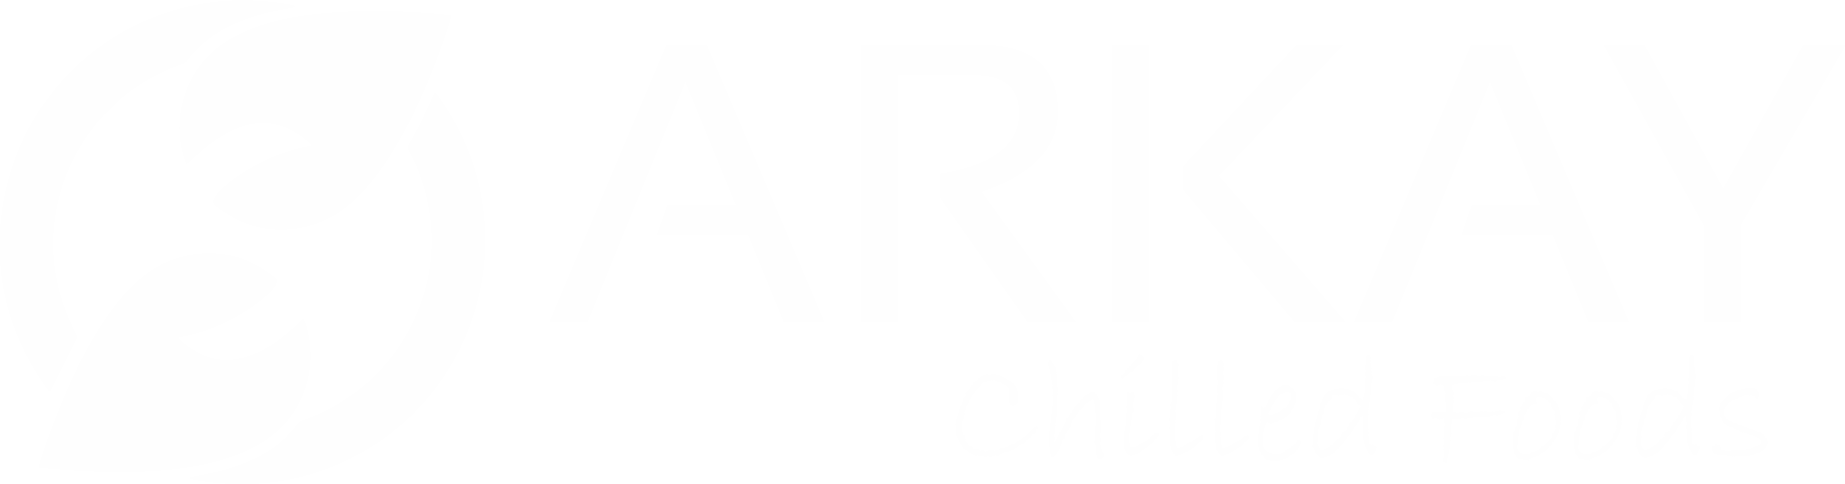 Arkay Chilled Foods Ltd